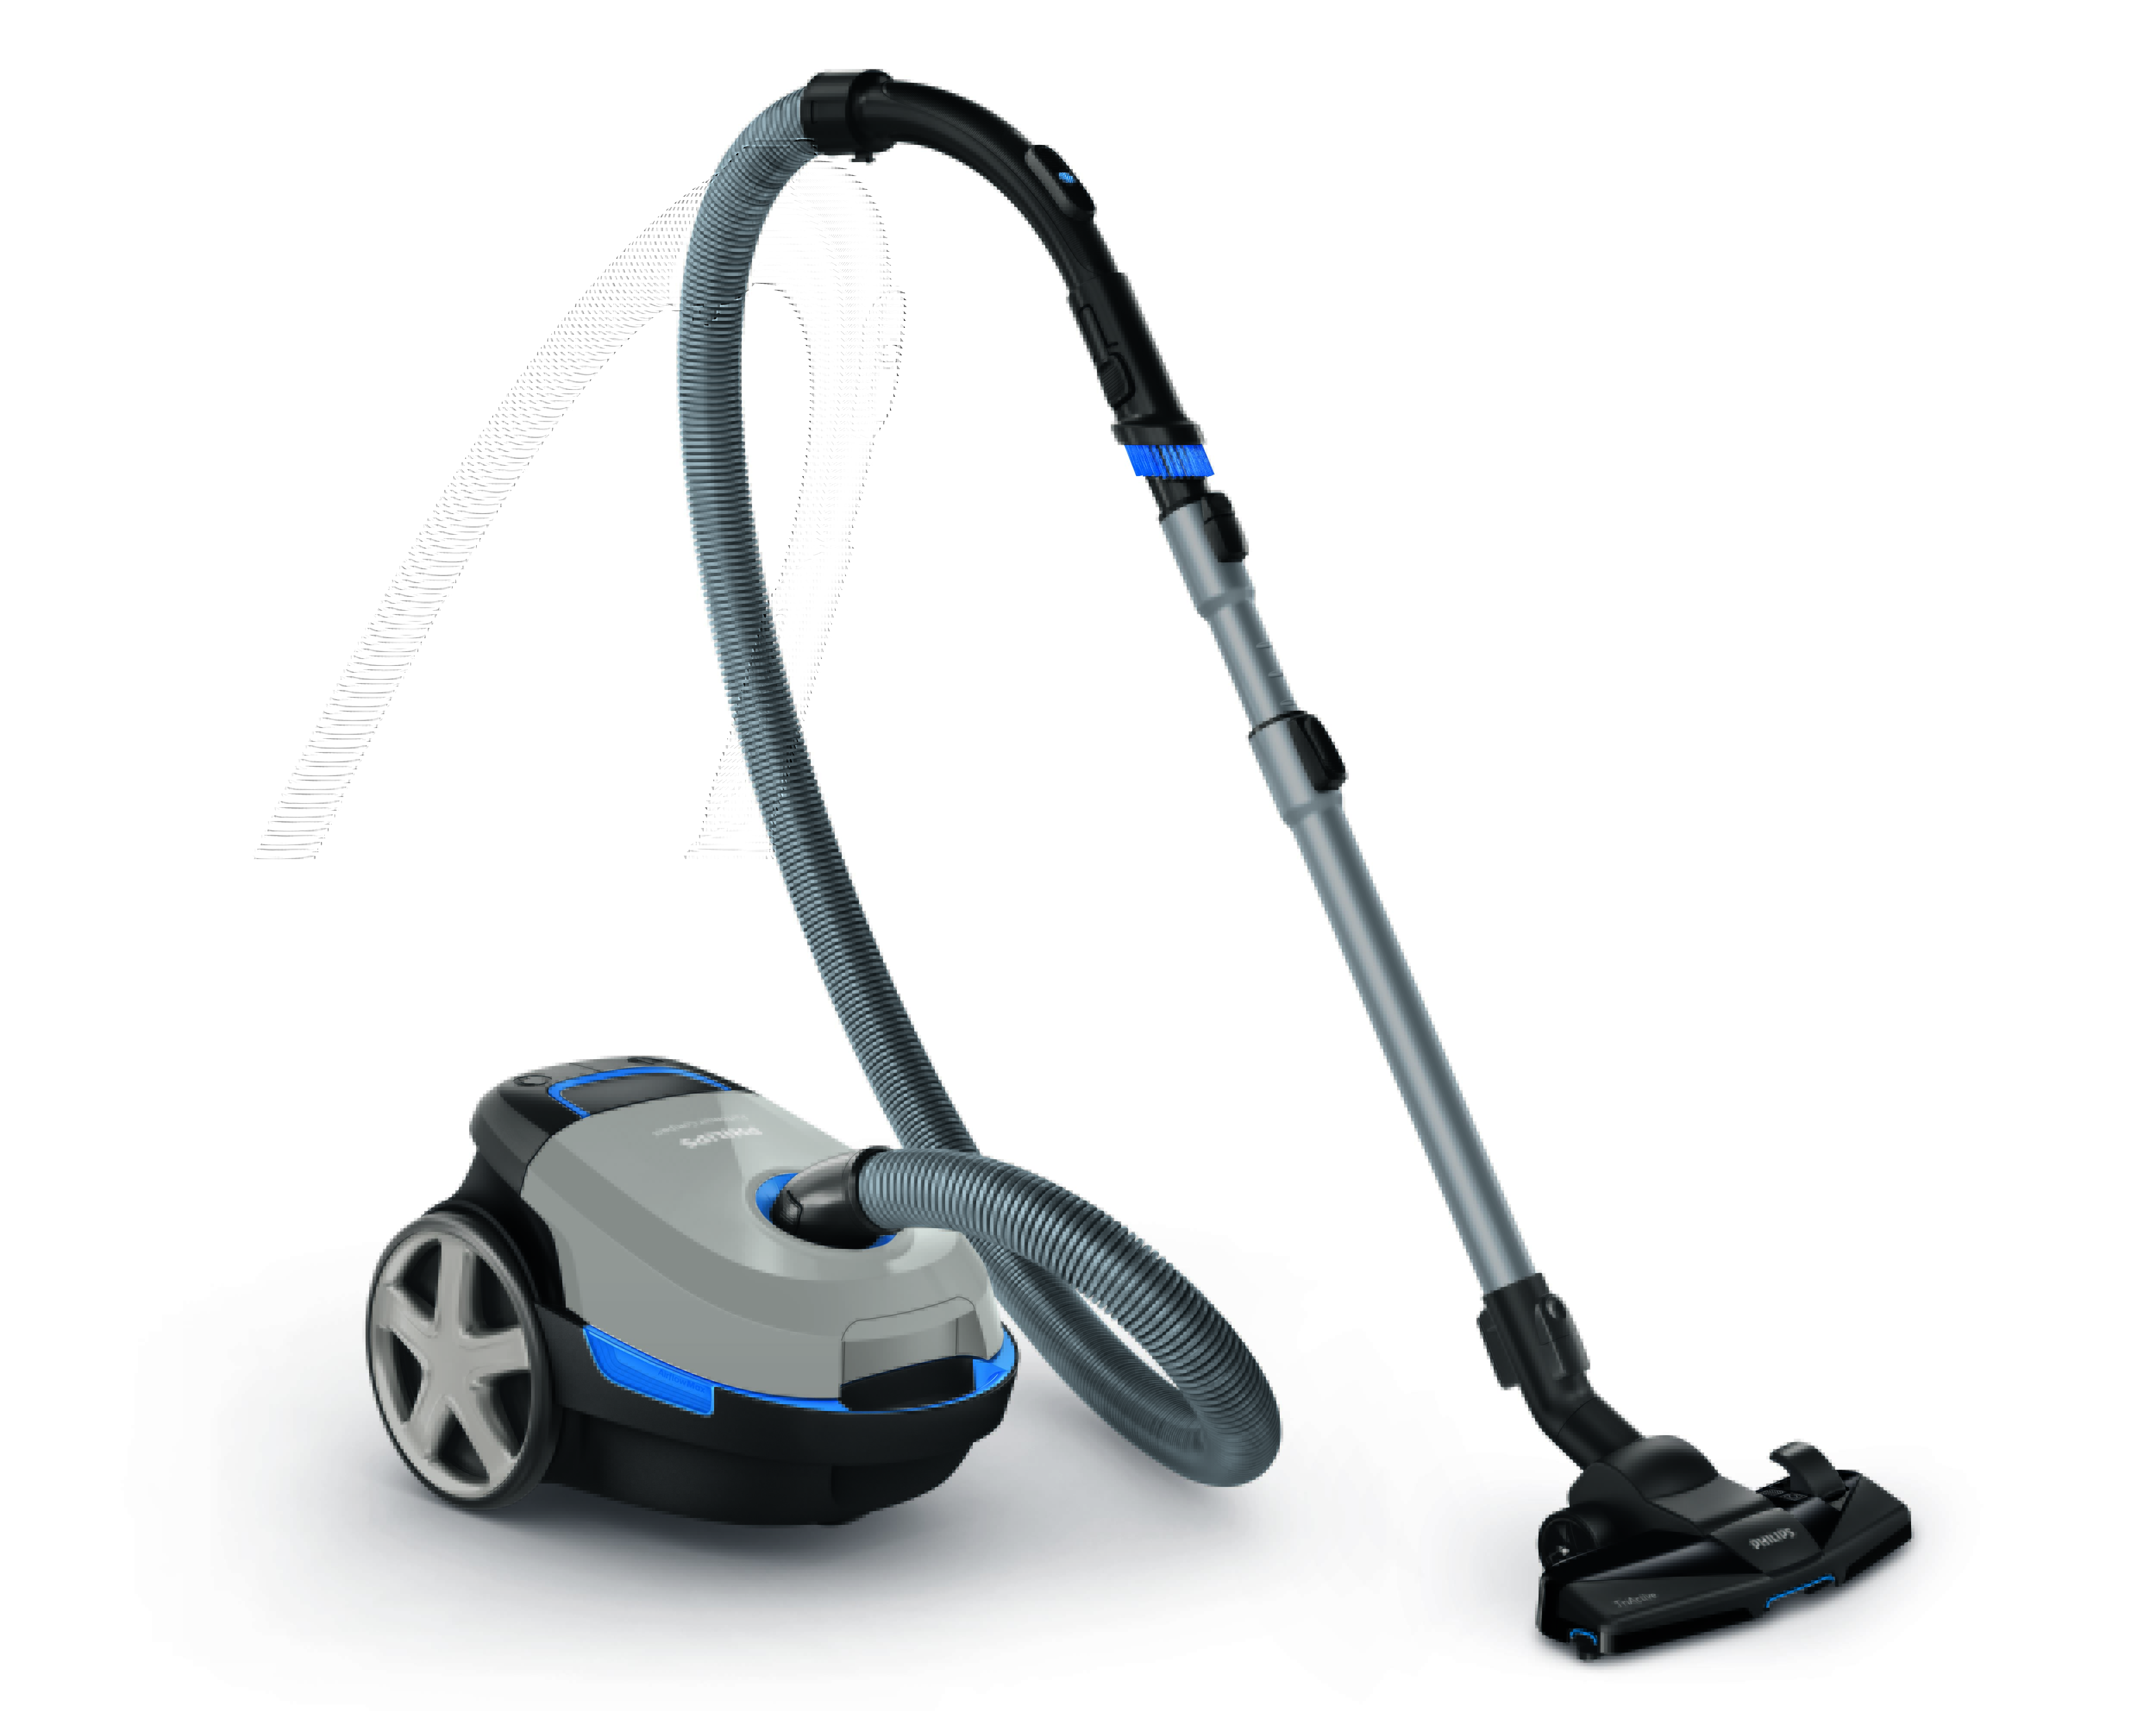 Performer Compact vacuum cleaner - Good Design